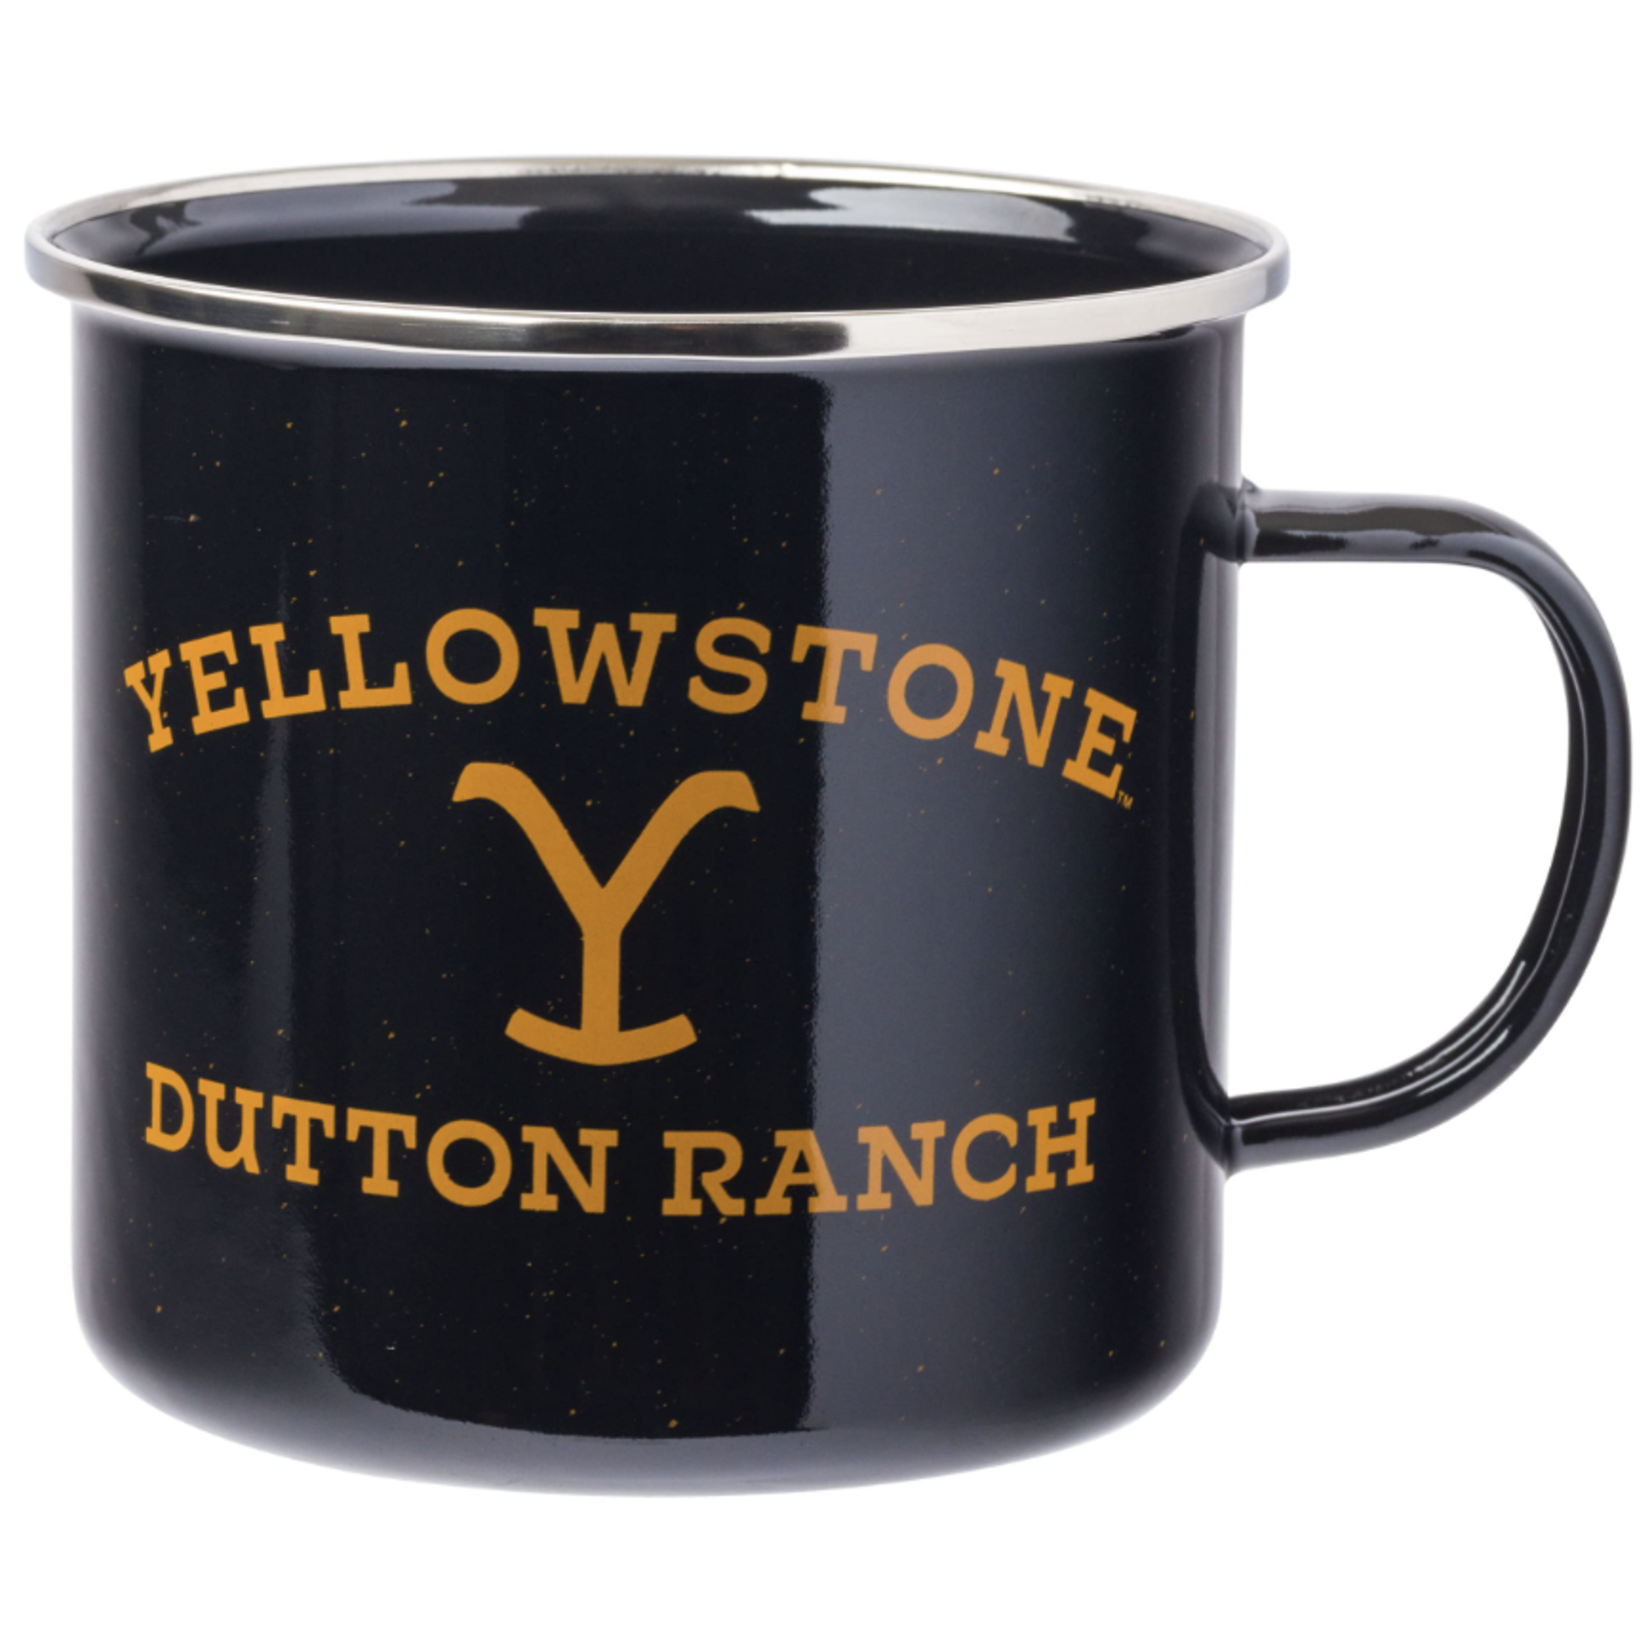 Silver Buffalo Enamel Mug - Yellowstone Dutton Ranch